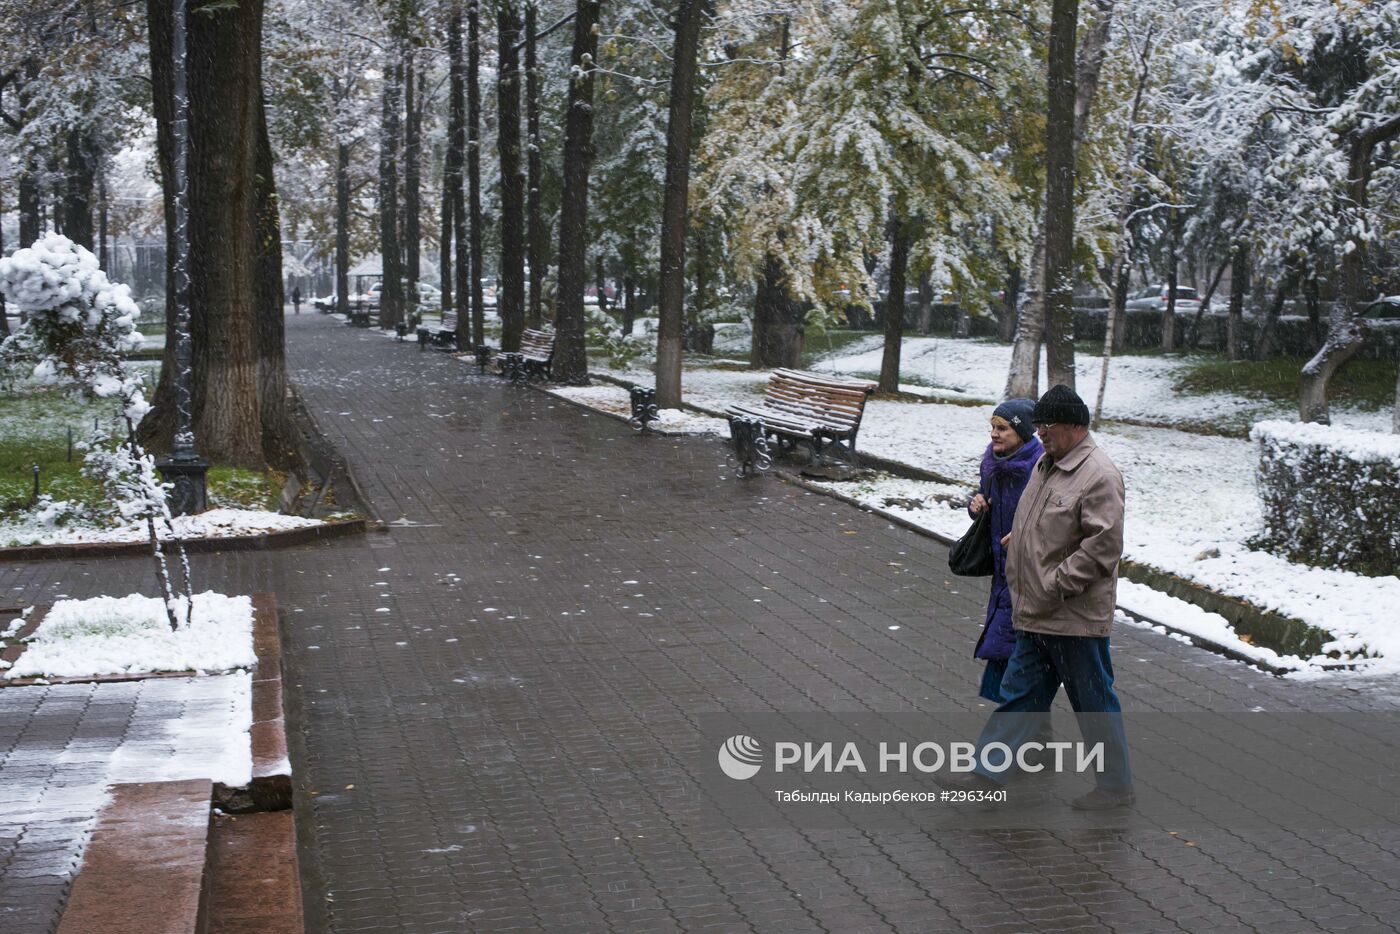 Снег в Бишкеке